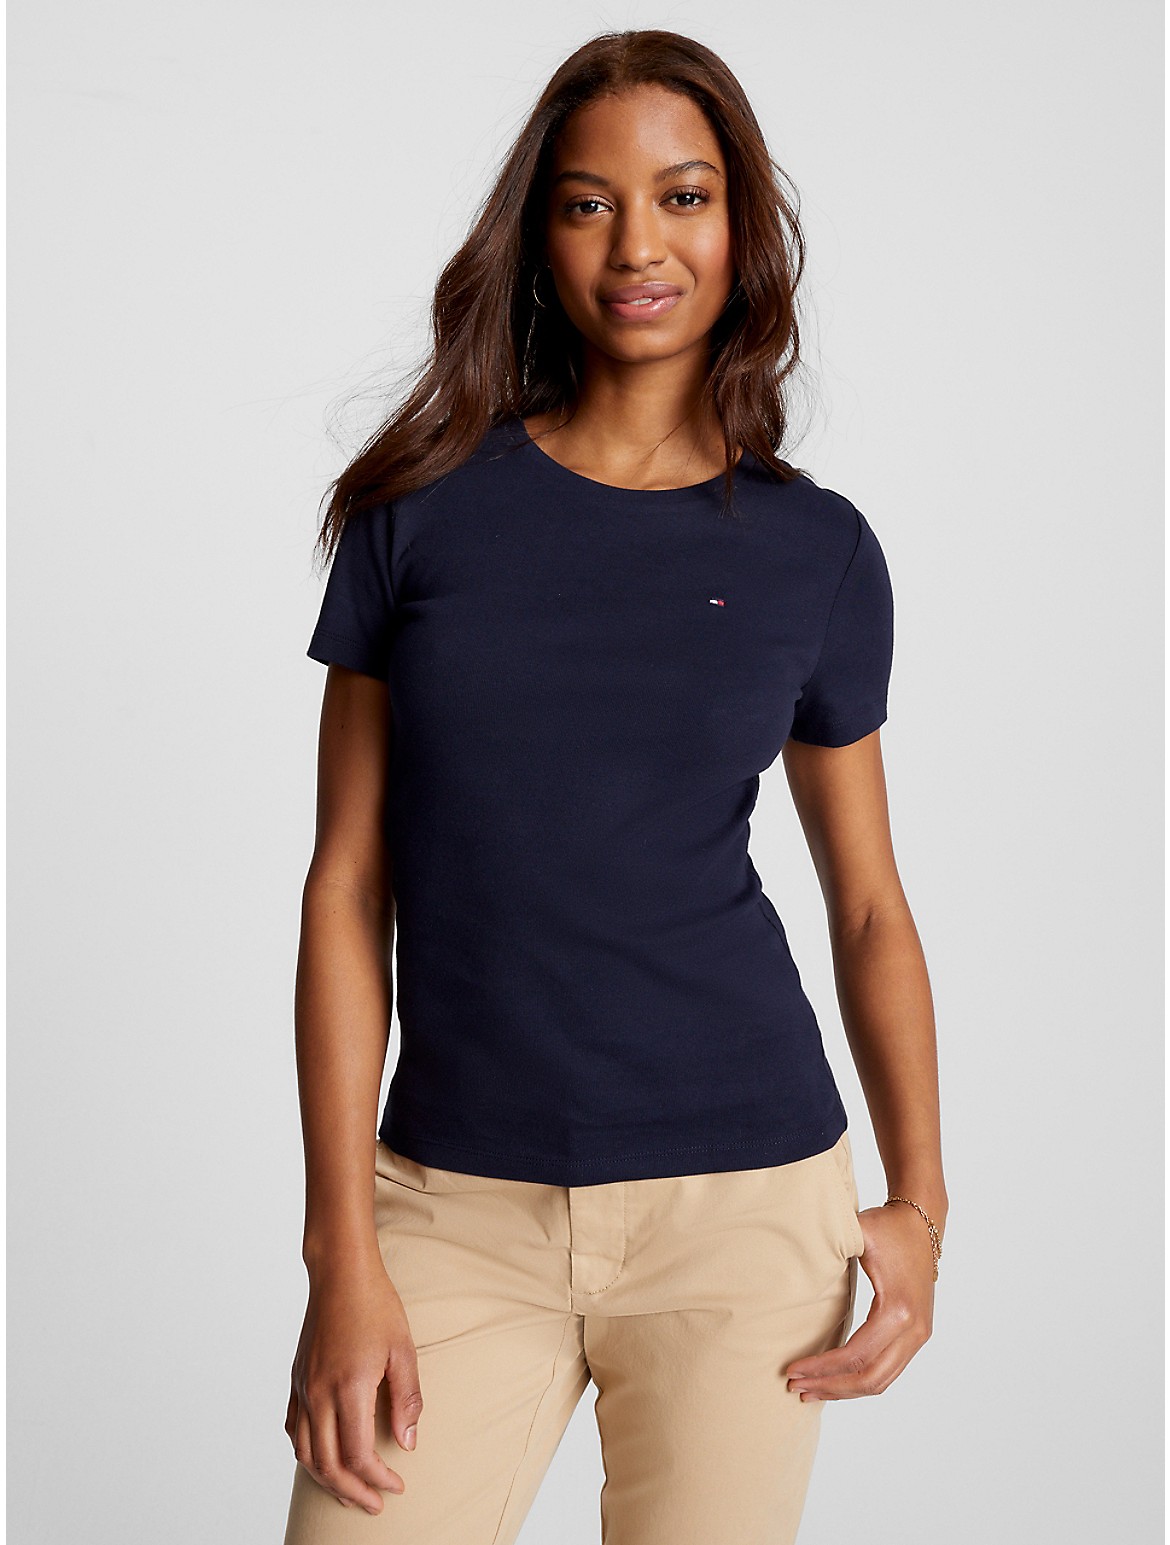 Tommy Hilfiger Women's Favorite Crewneck T-Shirt